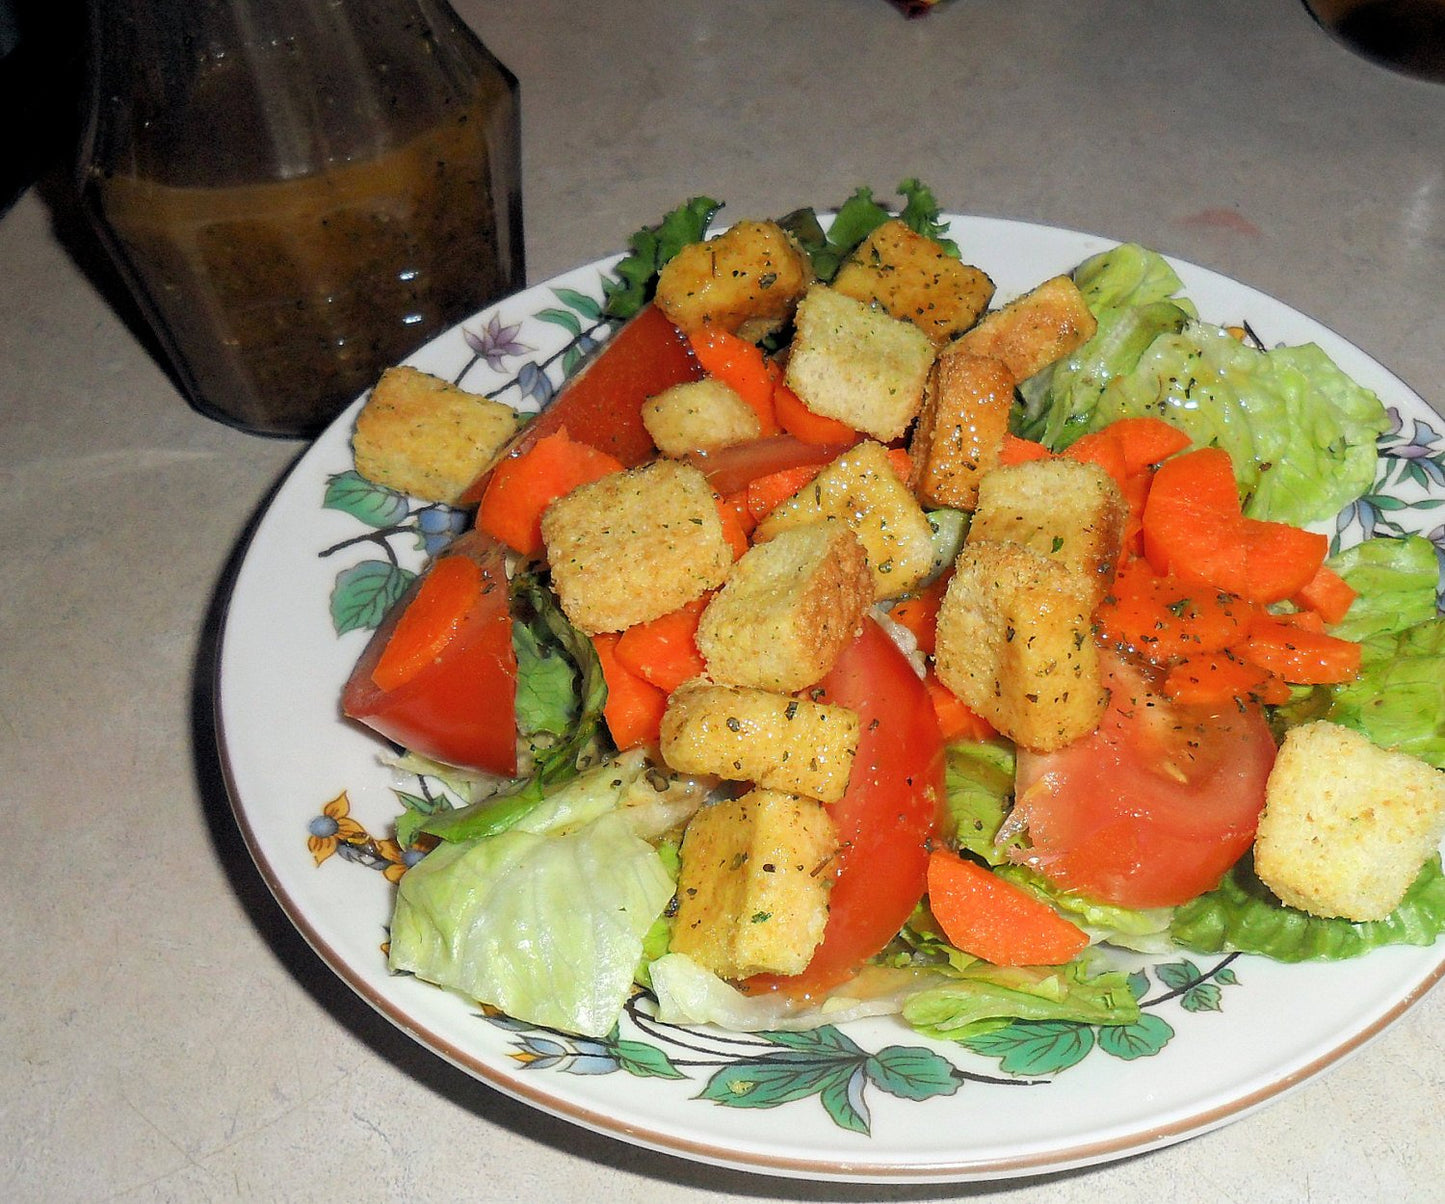 Herbed Salad Dressings Mixes, Set of 5 - Hand blended Dry Herb Seasoning Blends